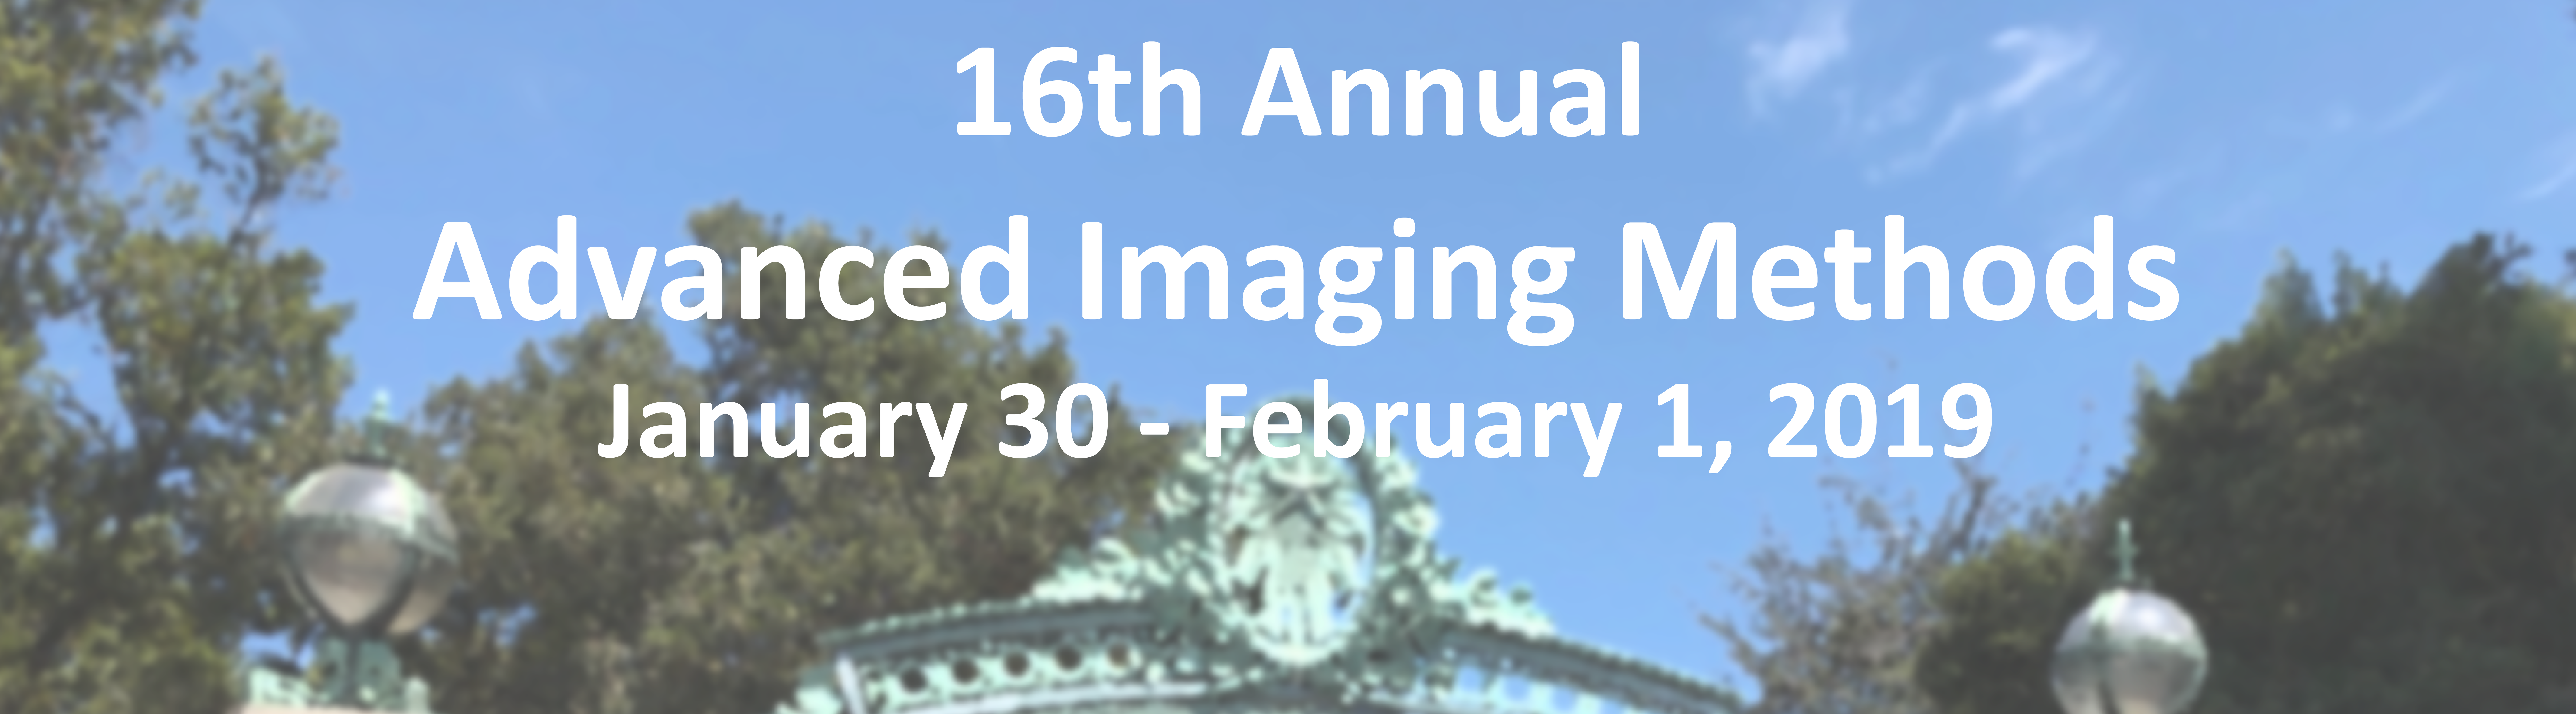 Advanced Imaging Methods 2019